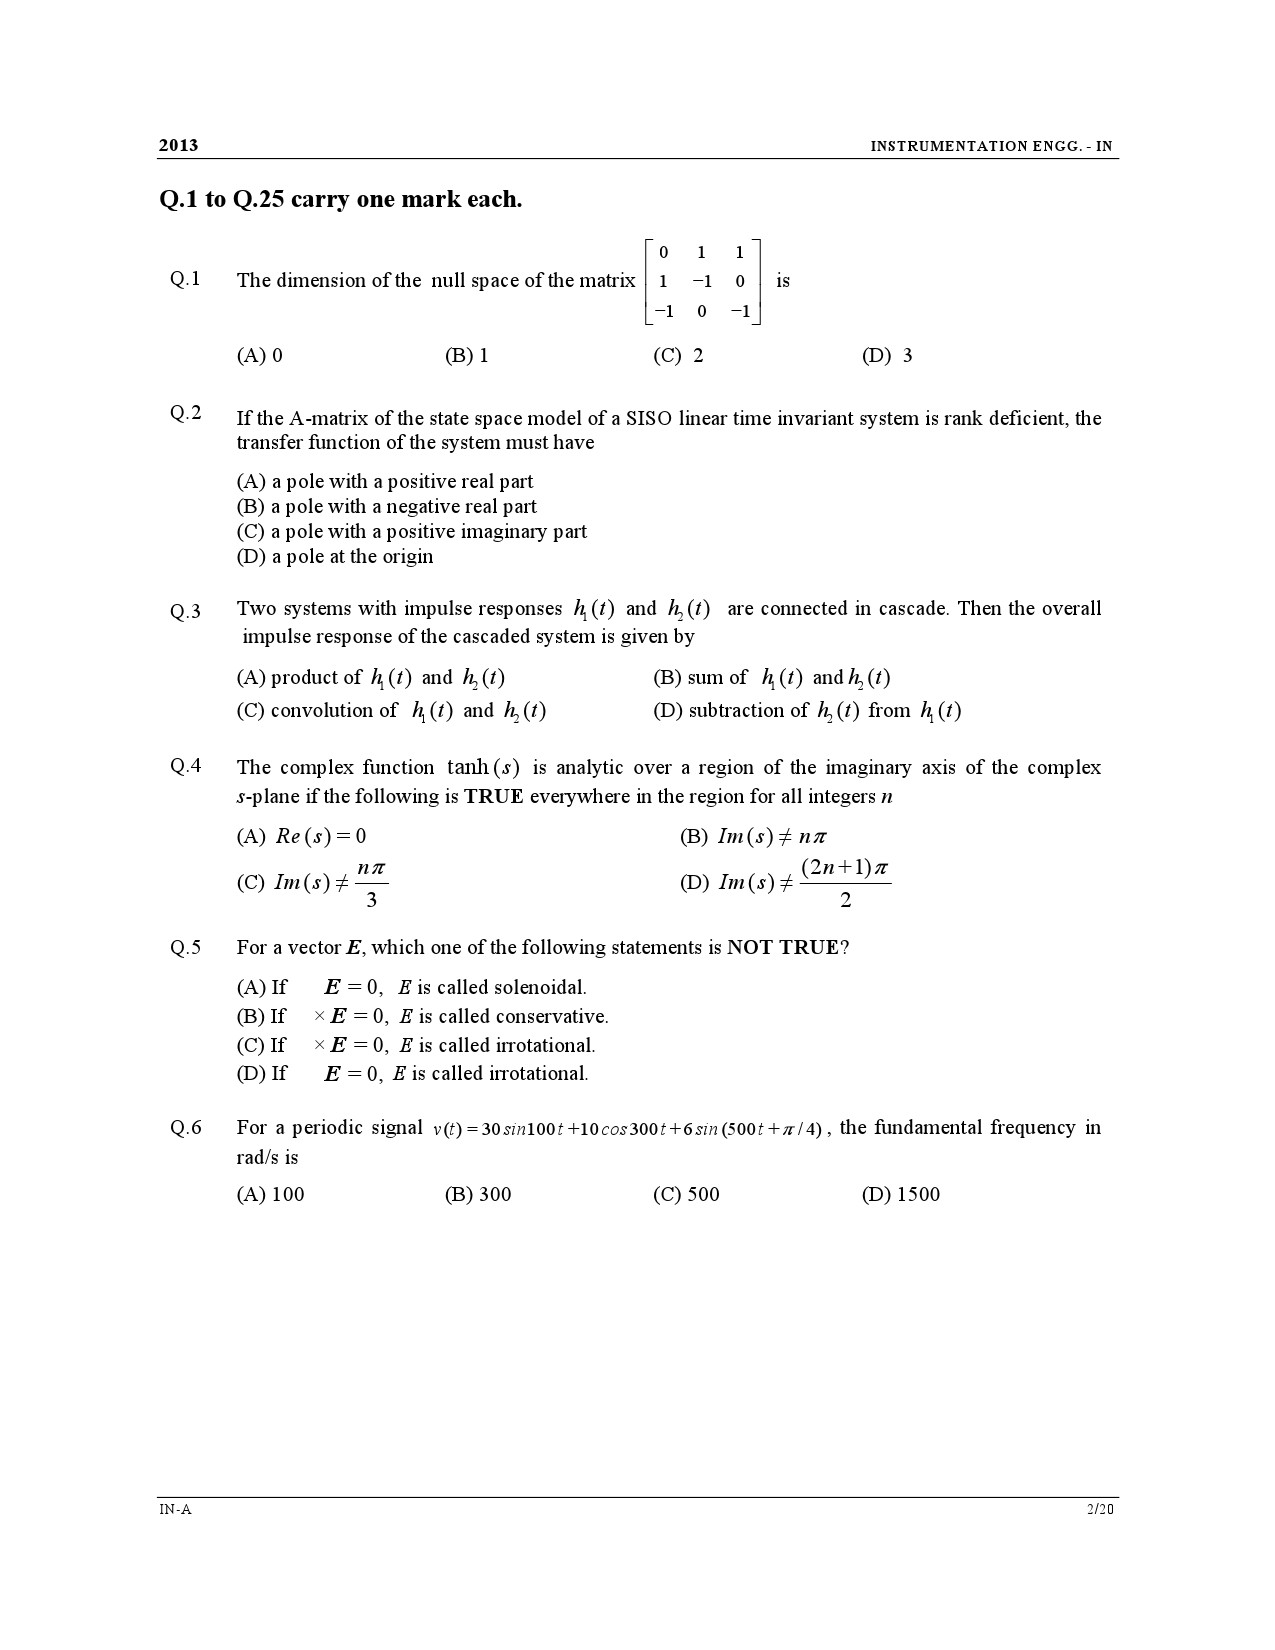 GATE Exam Question Paper 2013 Instrumentation Engineering 2